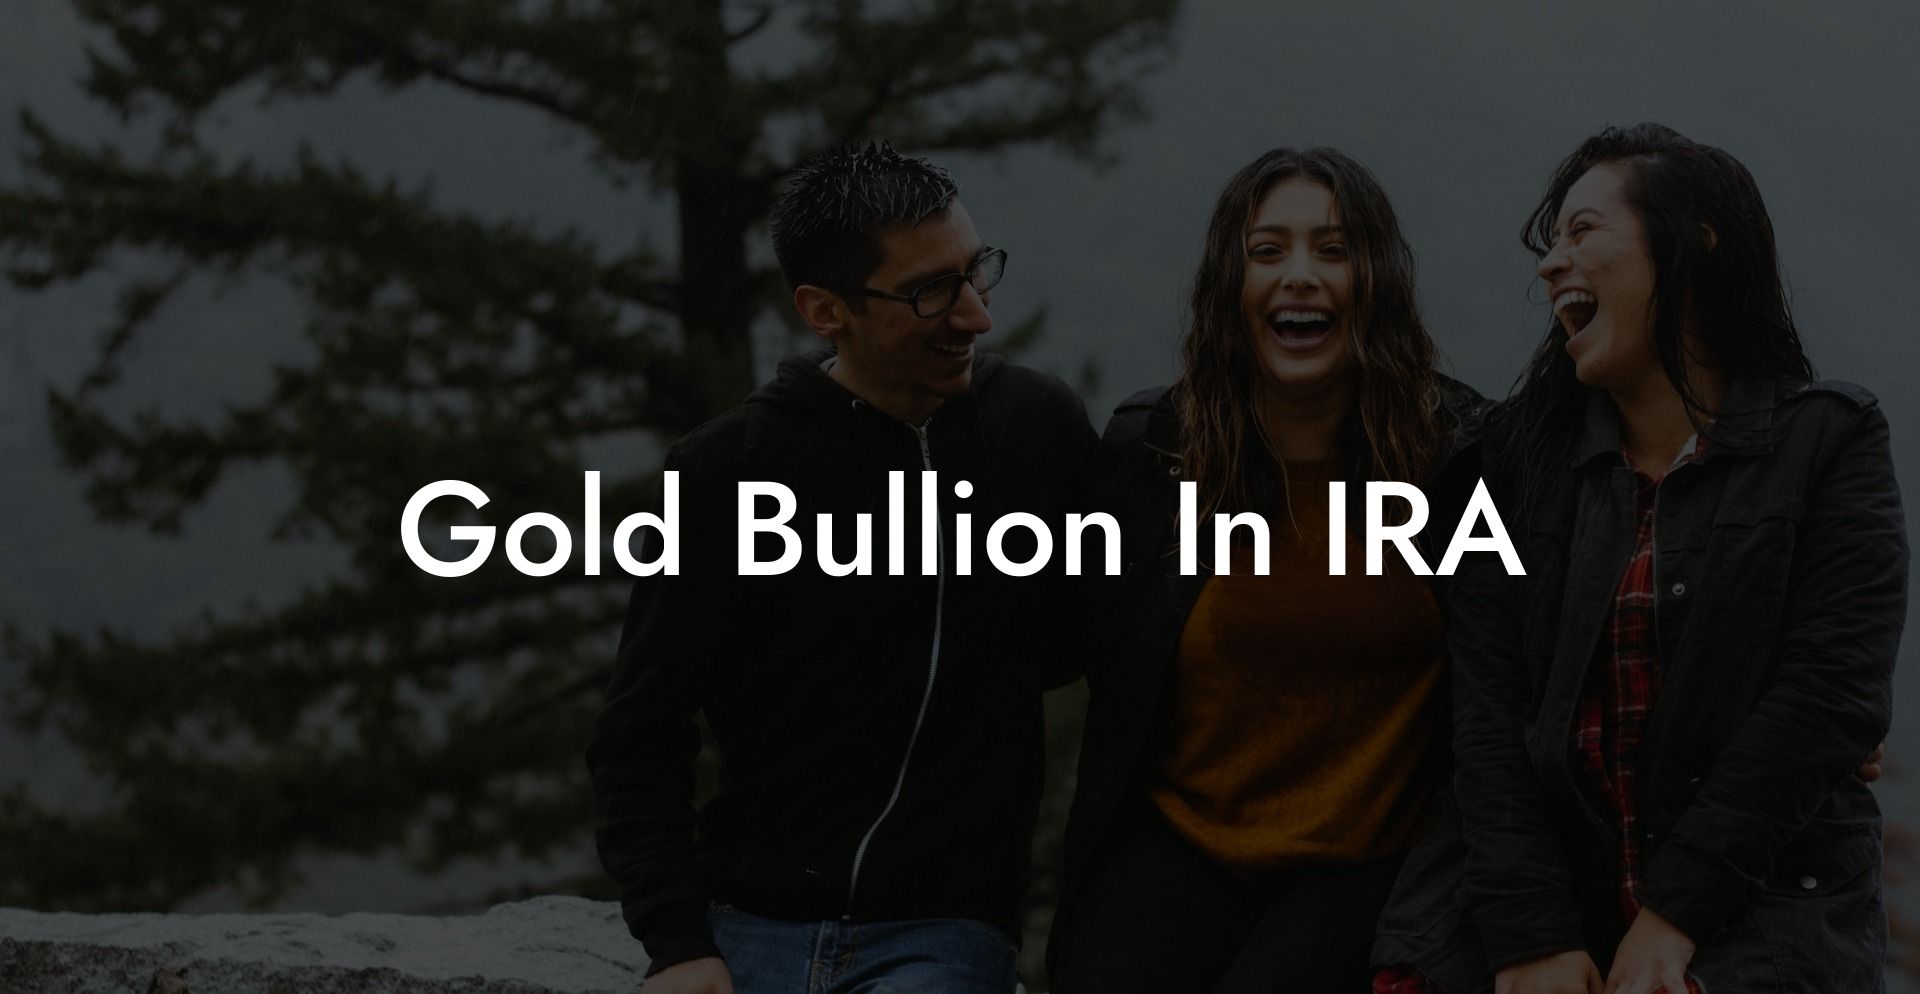 Gold Bullion In IRA